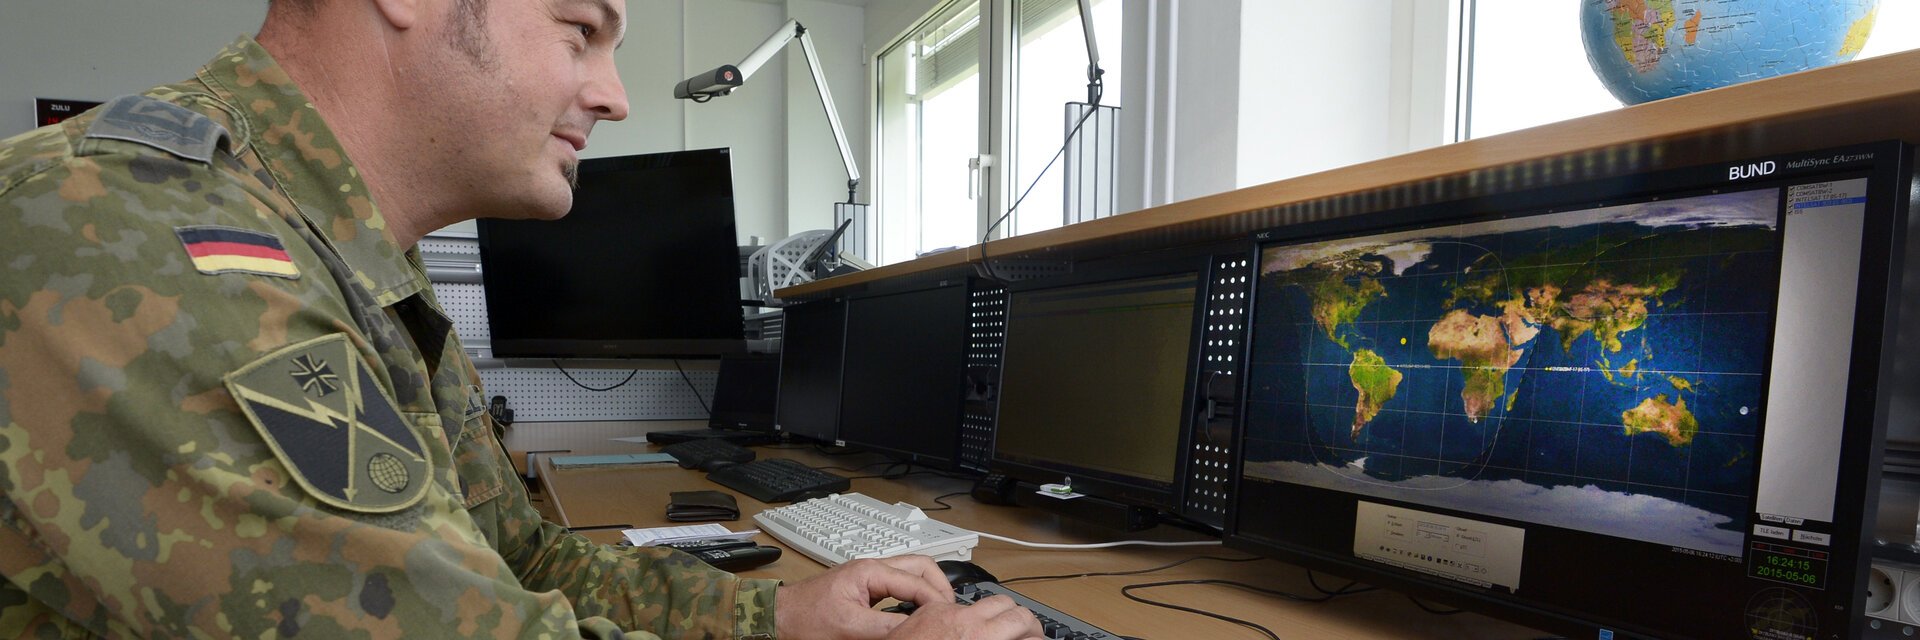 IT-Techniker in Uniform arbeitet am Computer